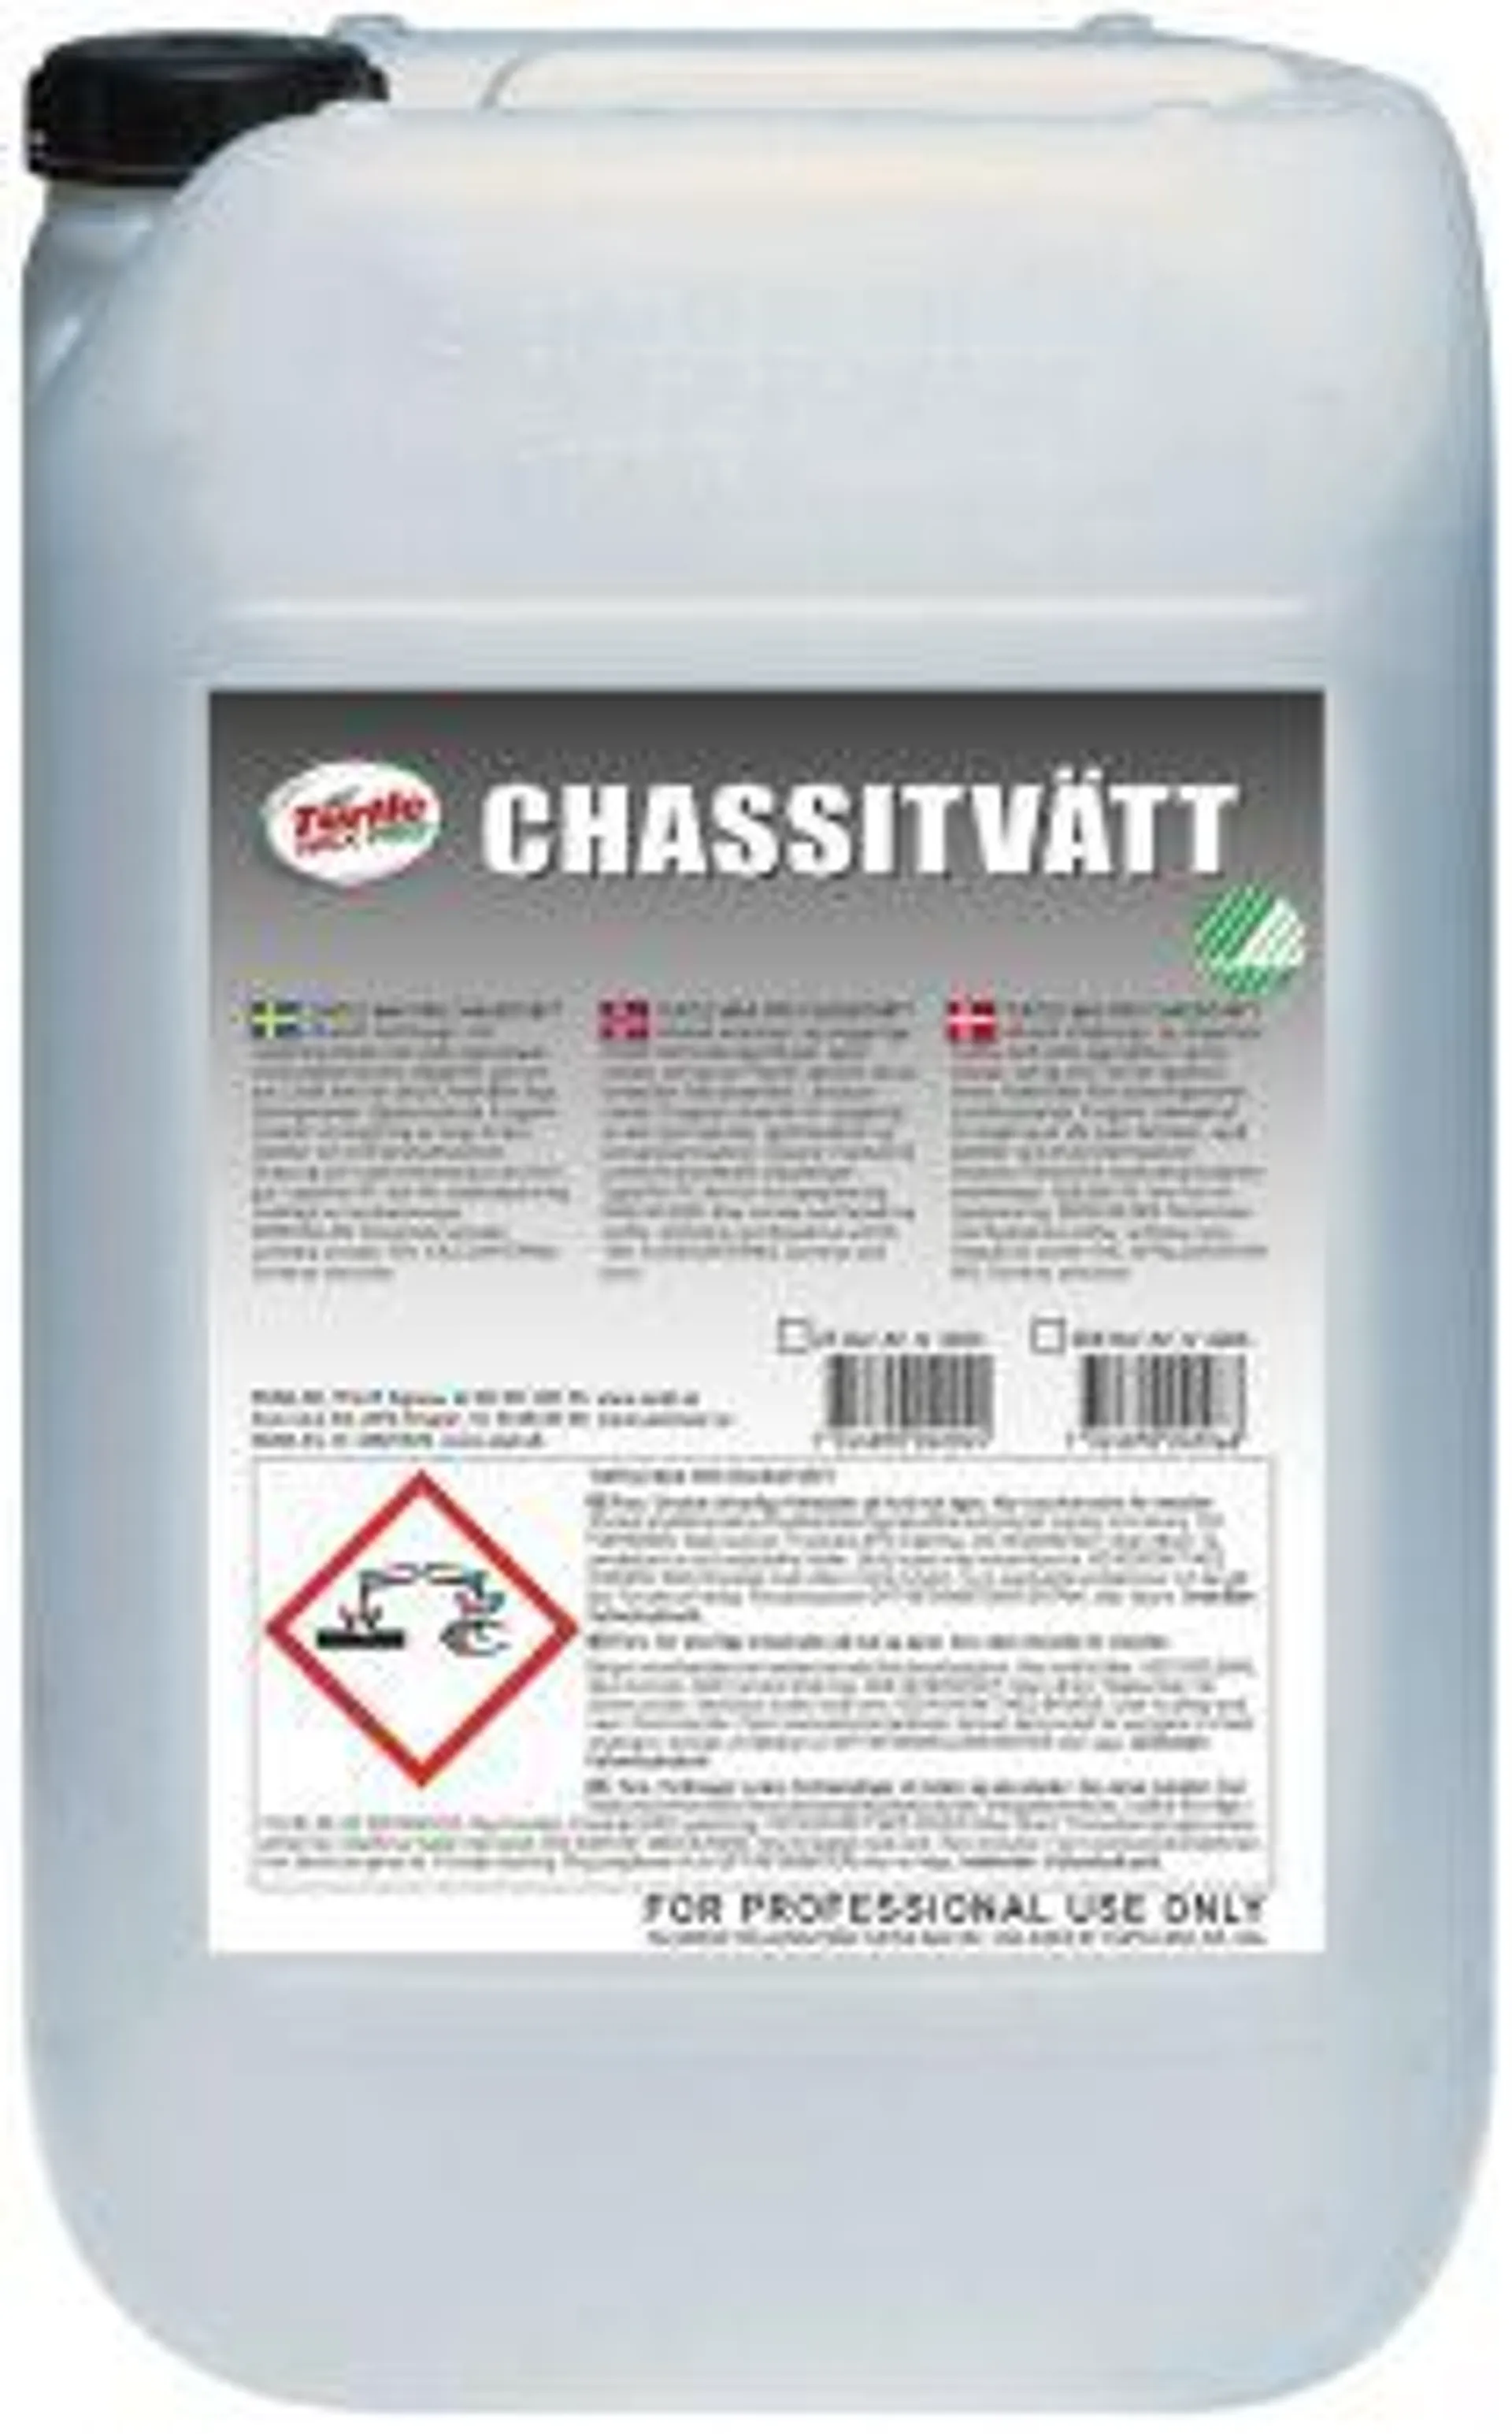 Turtle Wax Pro Chassitvätt - Alkalisk avfettning Dunk 25 l